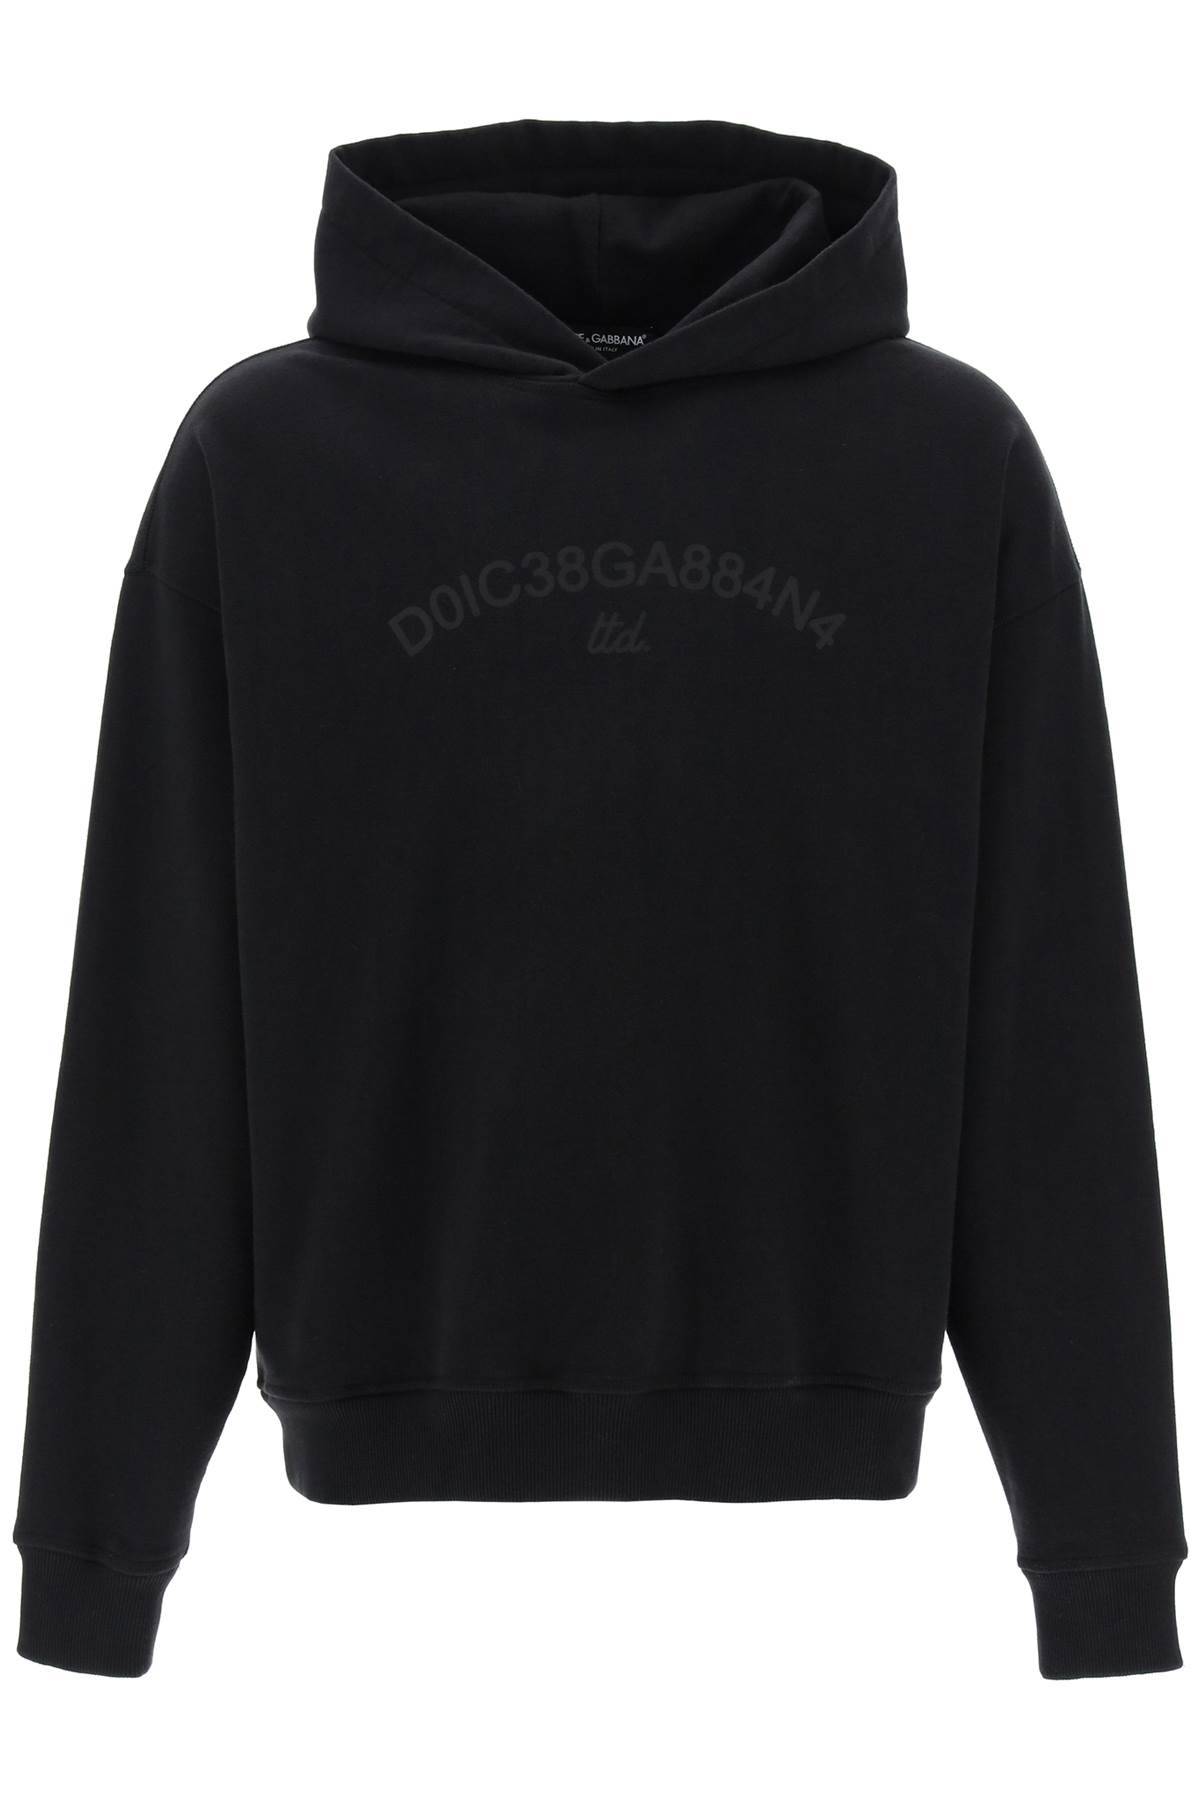 Dolce & Gabbana DOLCE & GABBANA hooded sweatshirt with logo print